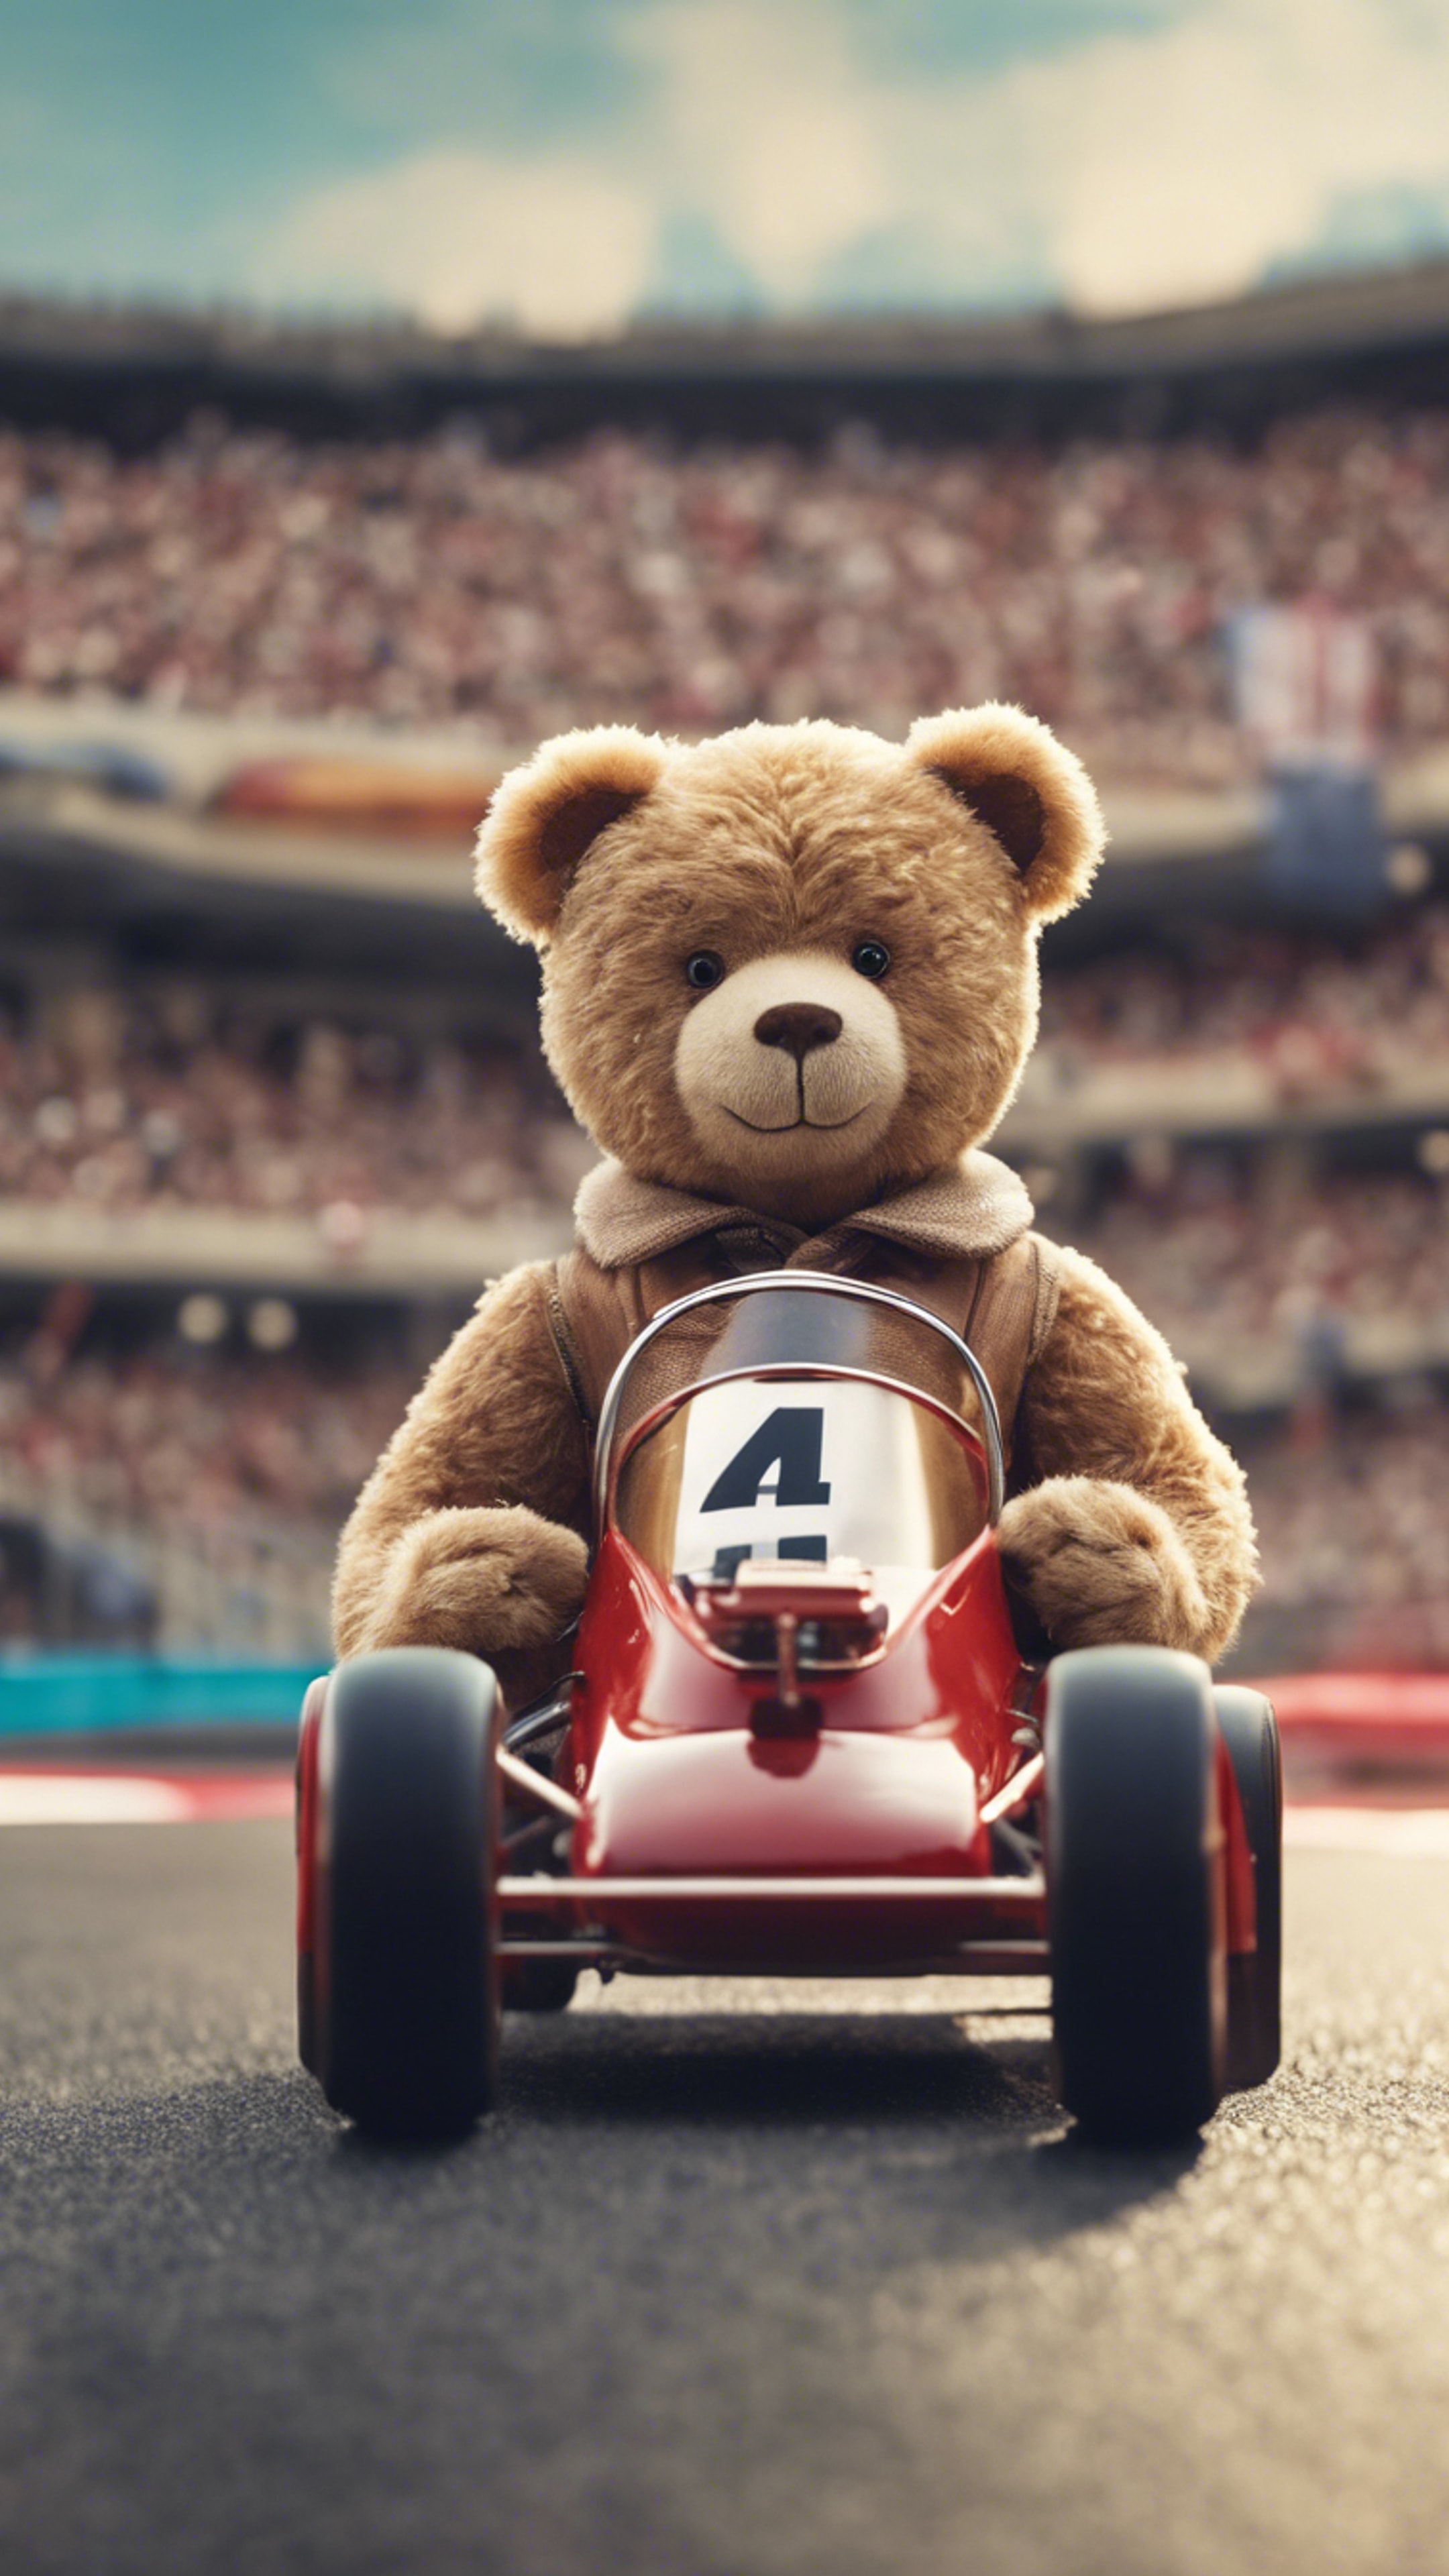 A teddy bear race car driver at the starting line of a dramatic toy car race scene.壁紙[1e4e33eb73094b6b9484]